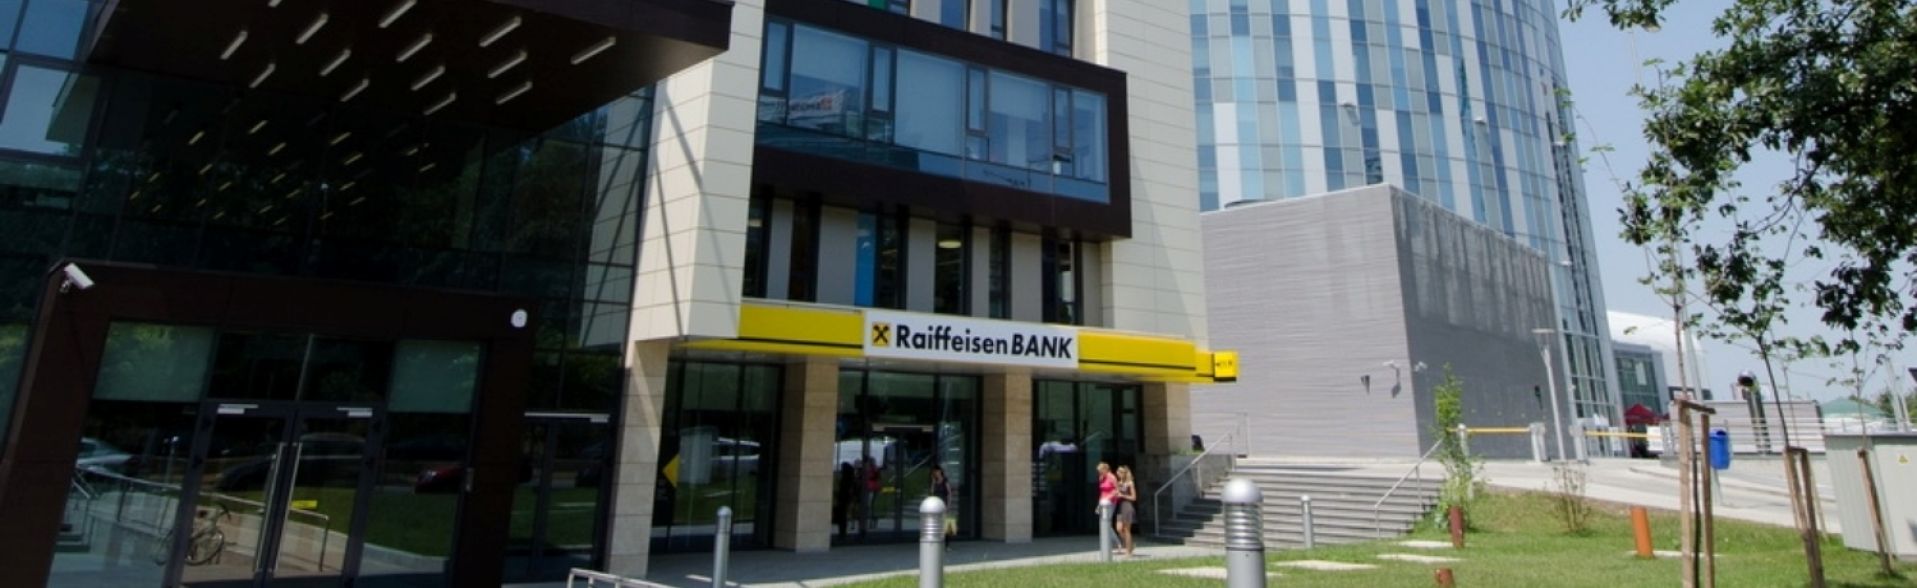 Raiffeisen Bank, 1,1 milioane de clienți digitali în T1 2022